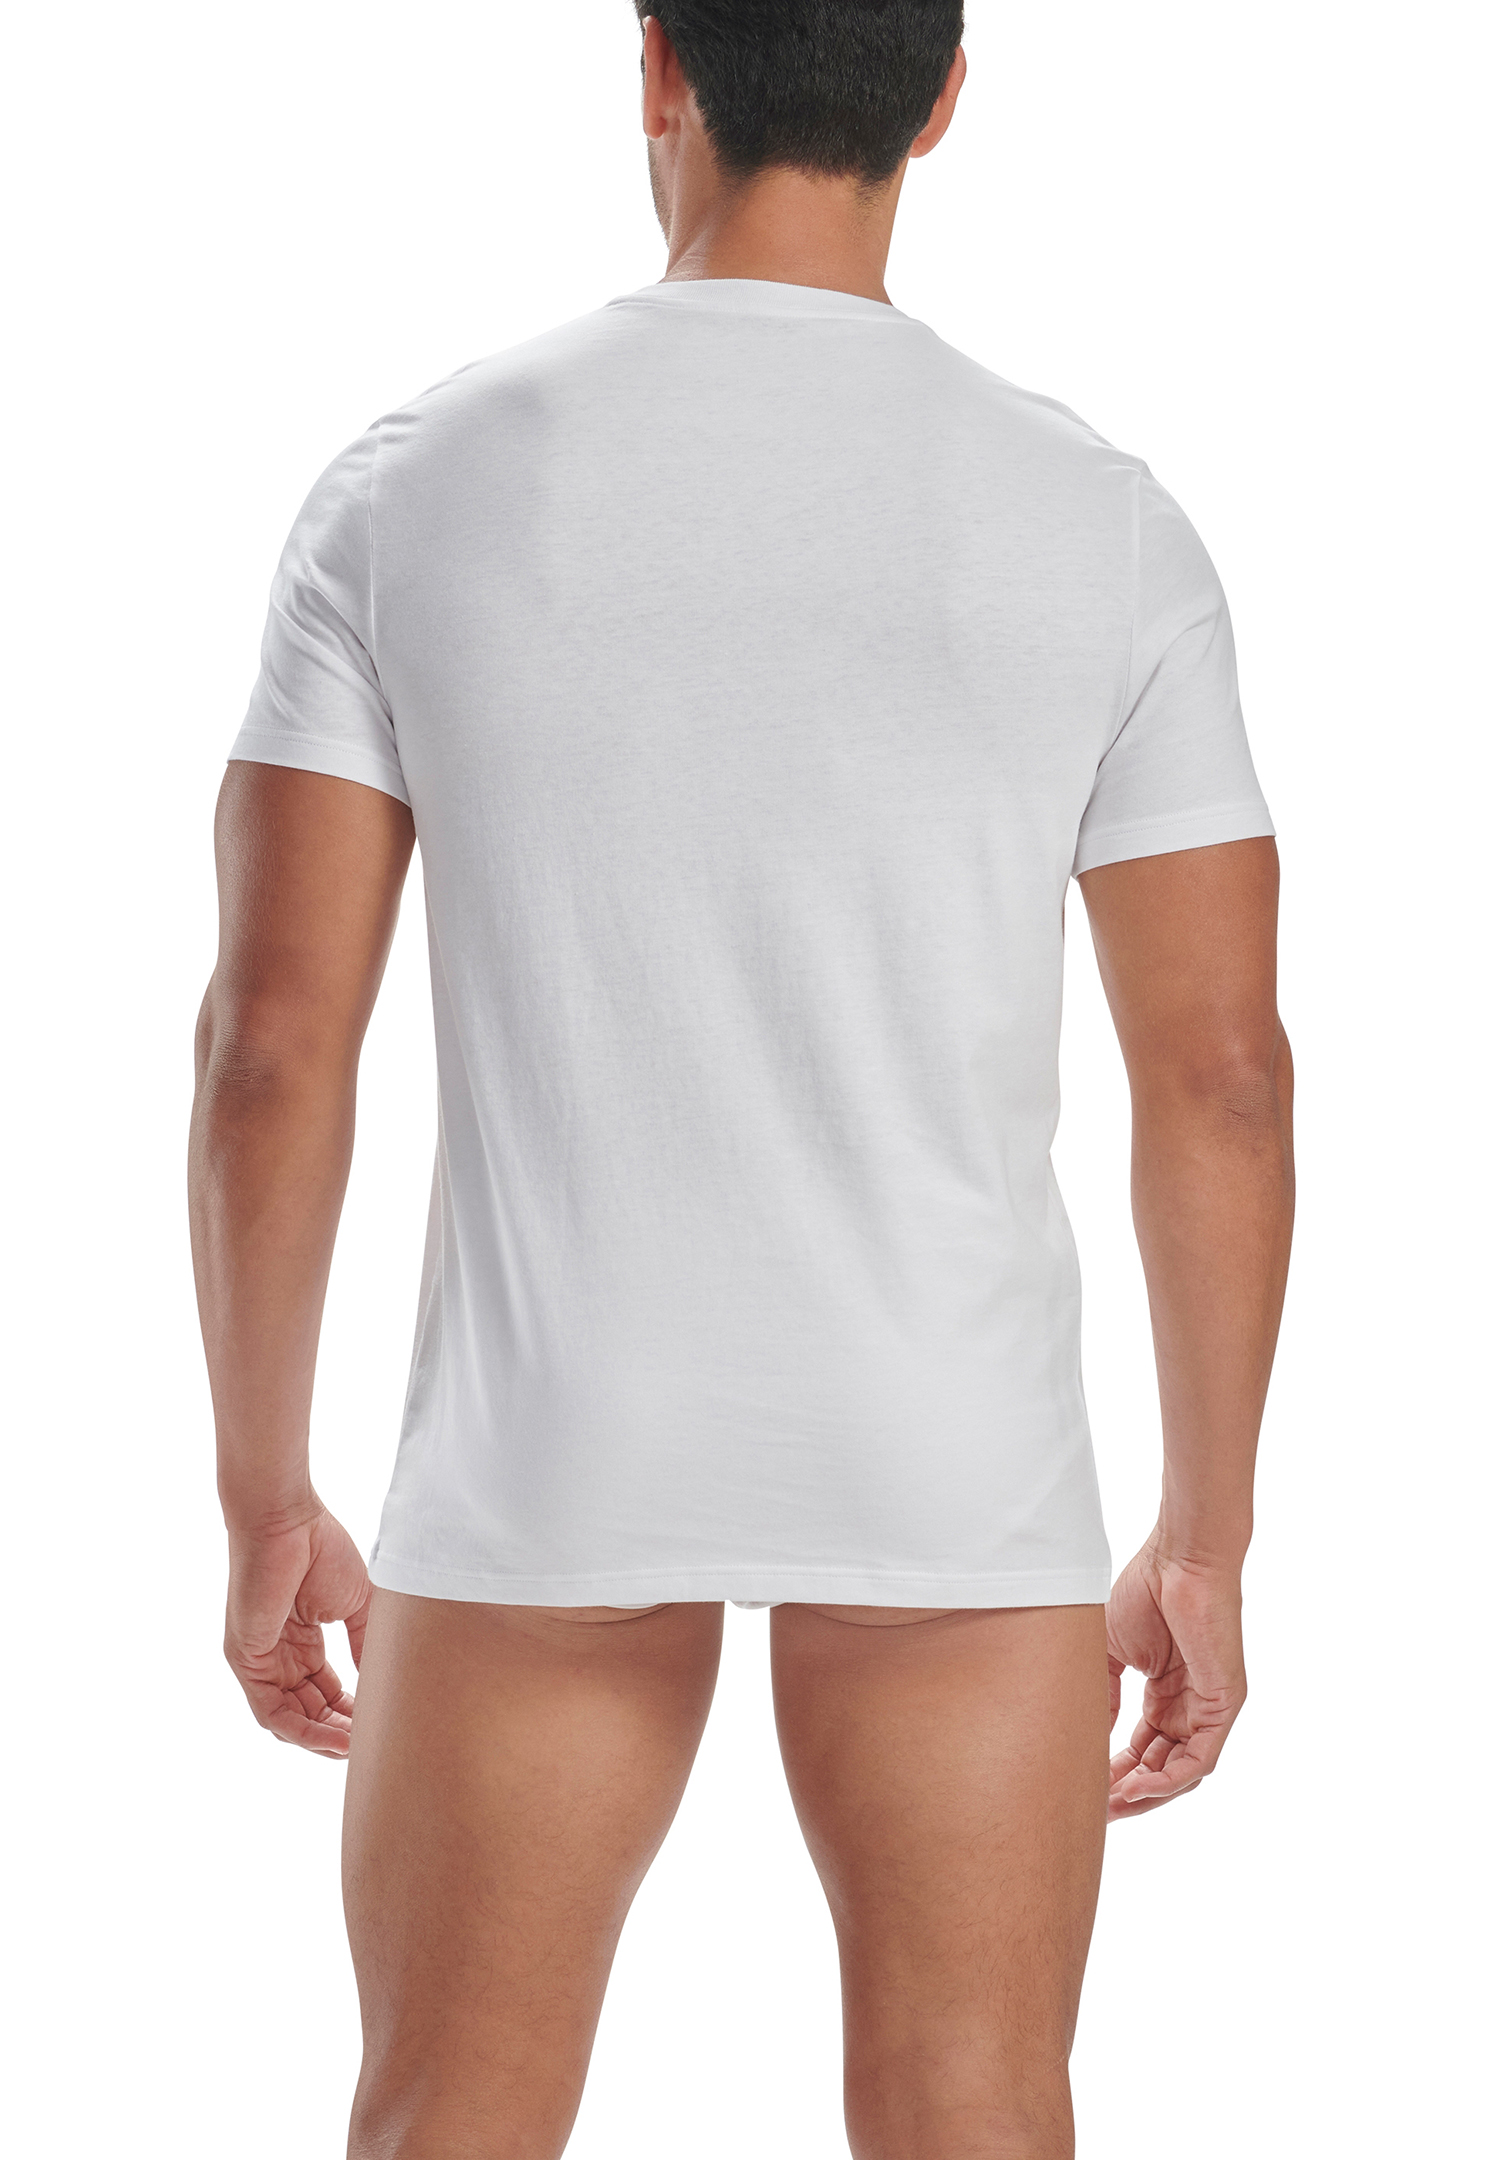 3 er Pack adidas V-Neck T-Shirt Herren Unterhemd V-Ausschnitt Baumwolle langlebig